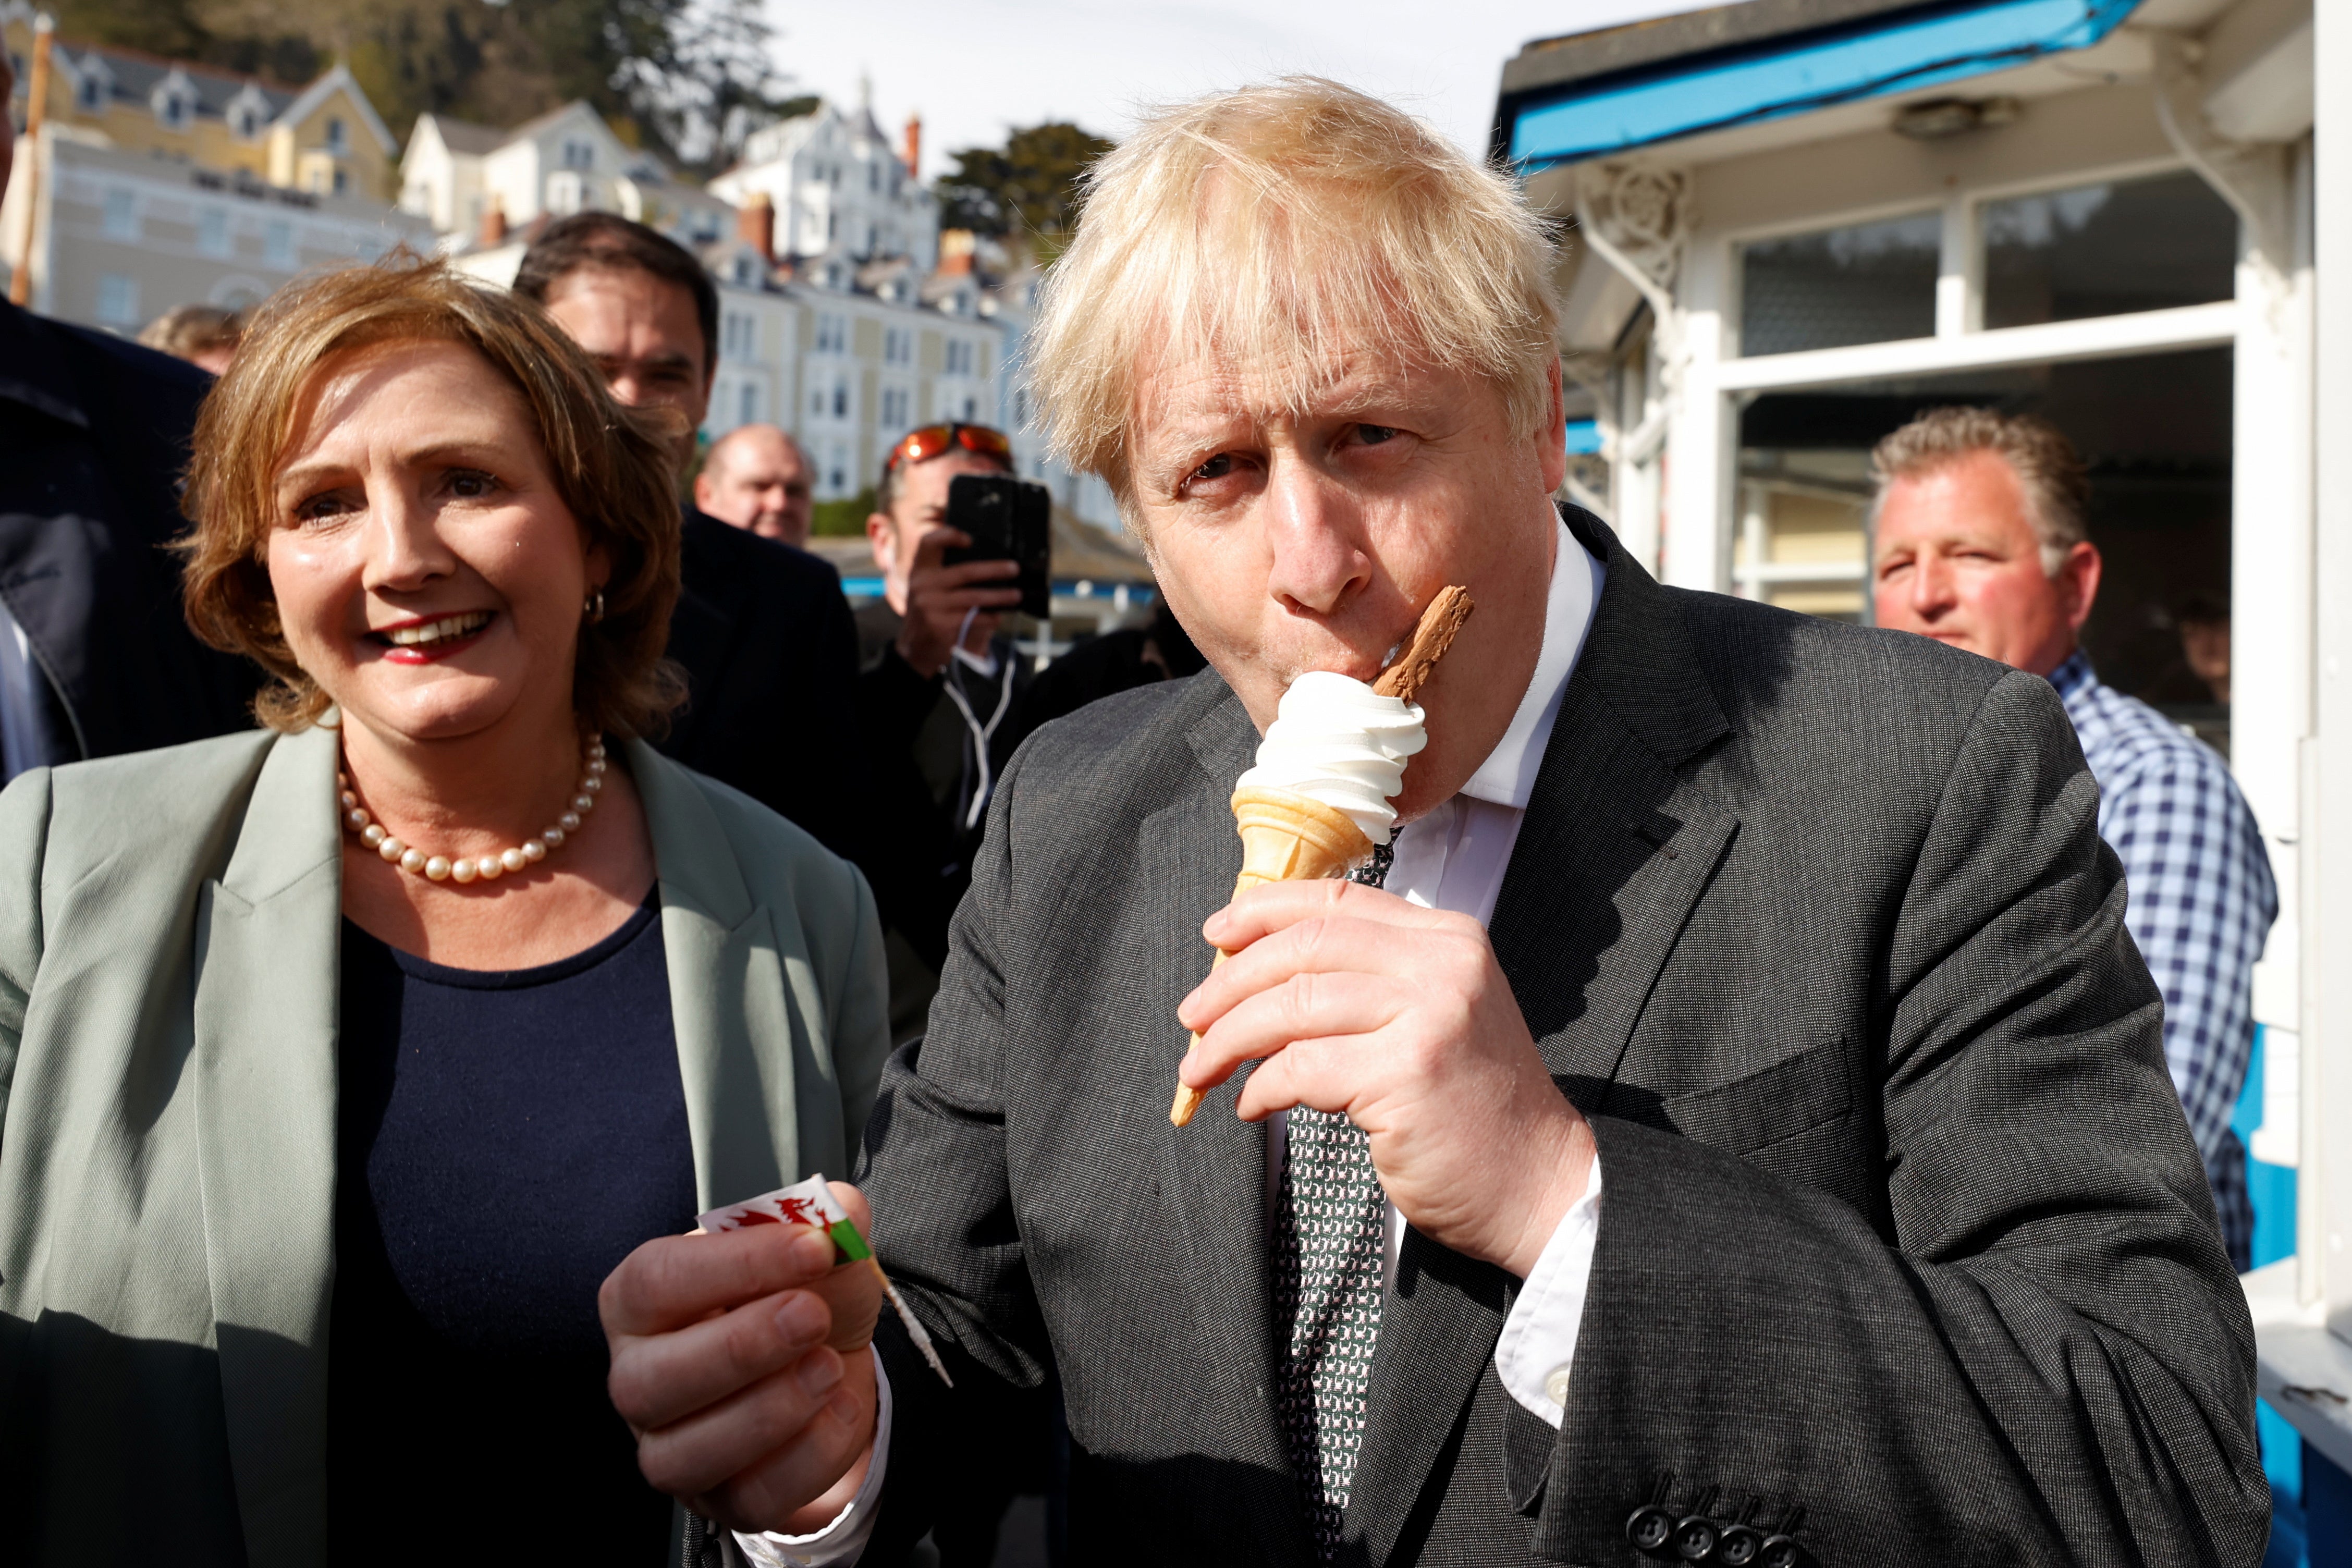 Prime Minister Boris Johnson eats an ice-cream during a visit to Llandudno (Phil Noble/PA)